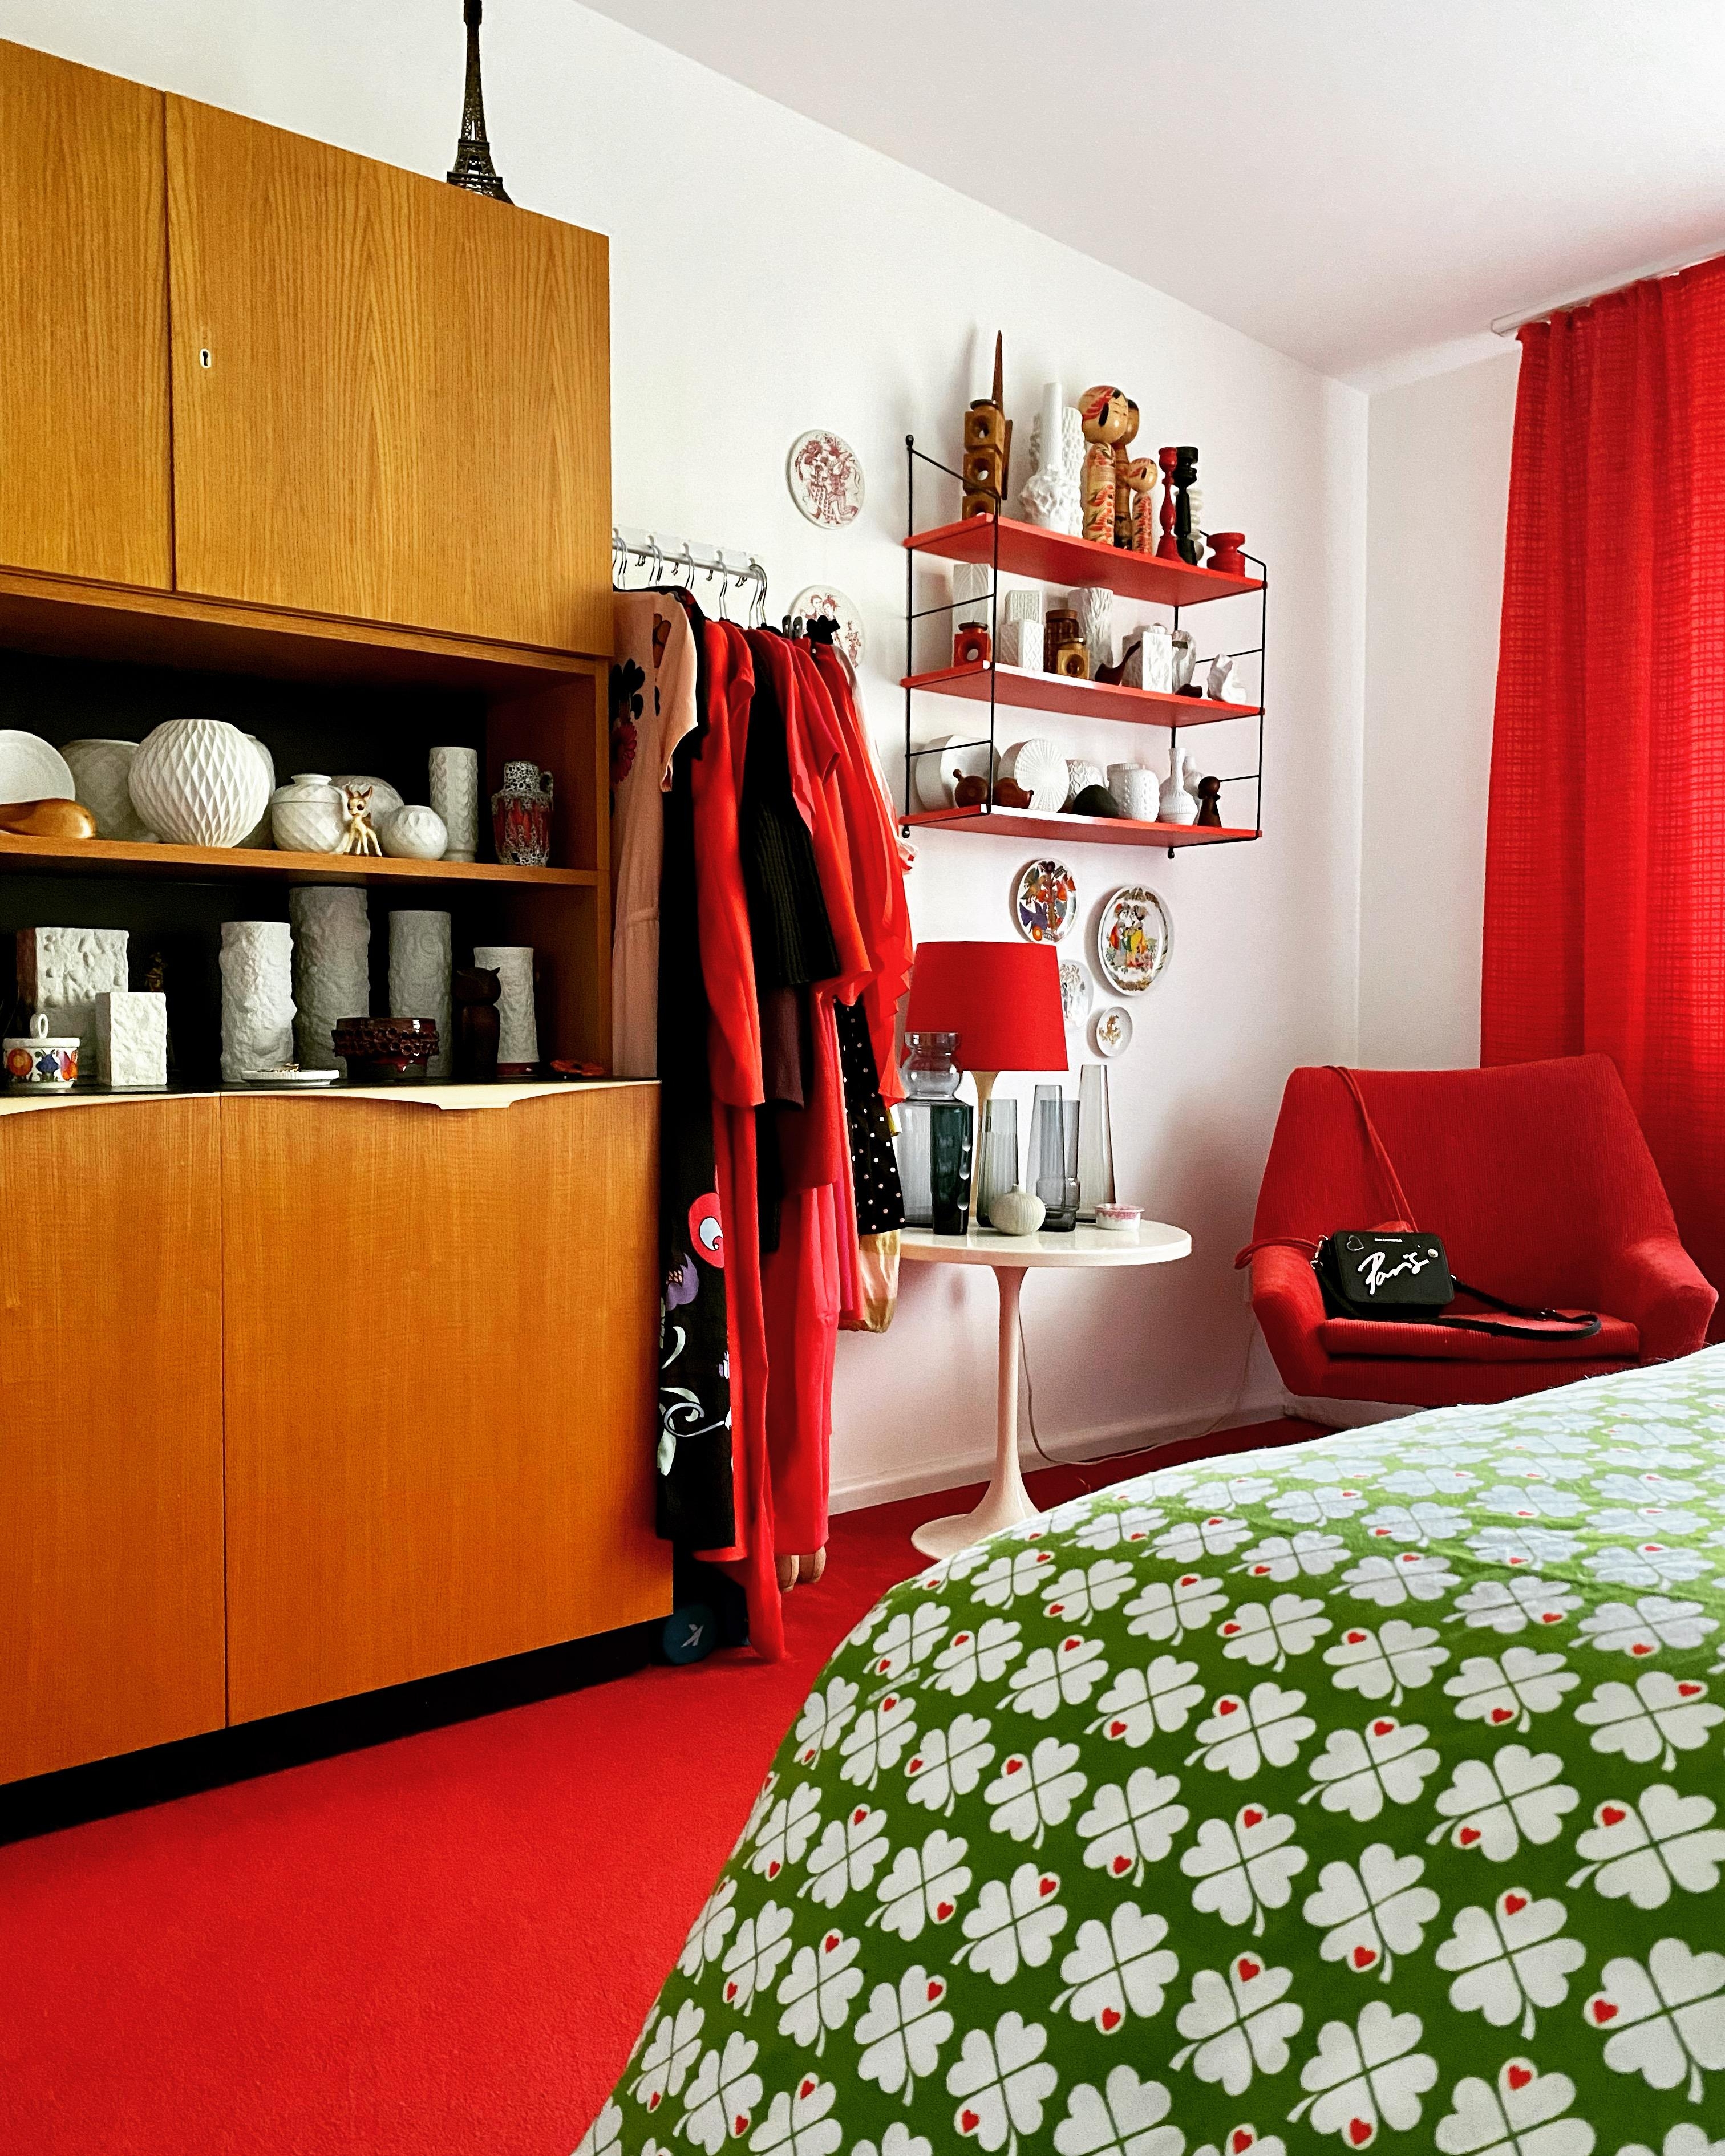 #bedroom#colorful#schlafzimmer#interior#interiordesign